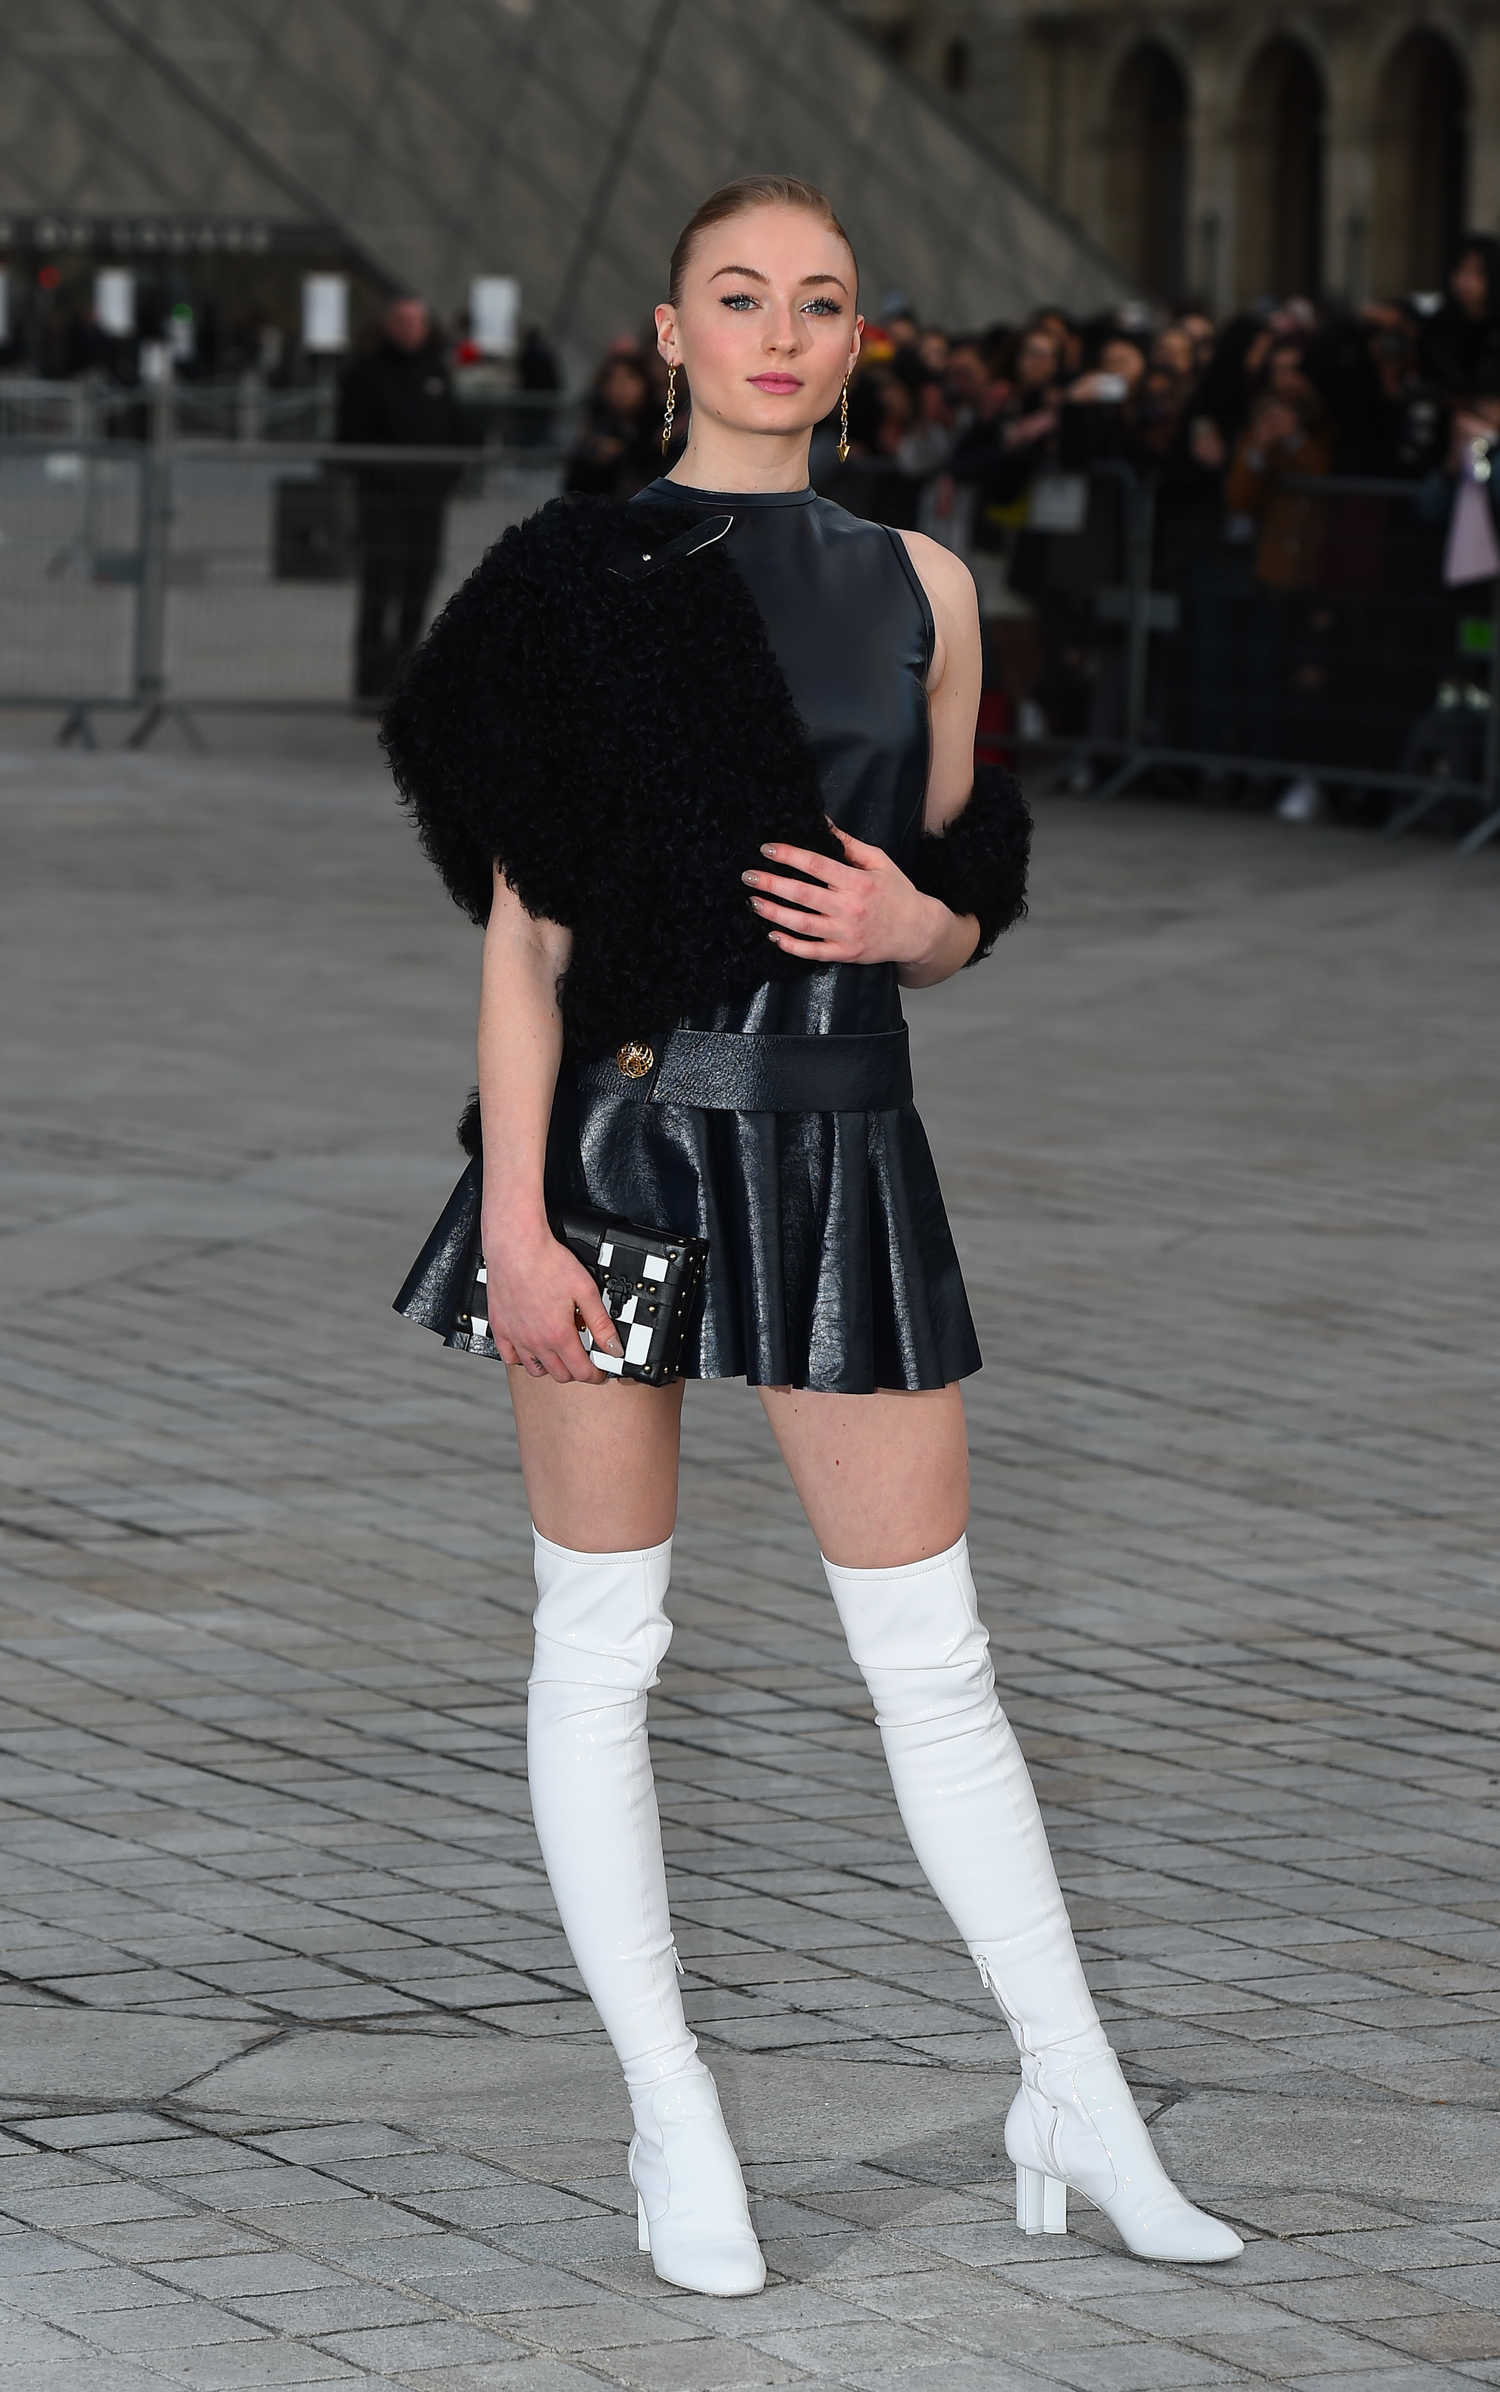 Sophie Turner at the Louis Vuitton Show During the Paris Fashion Week – Celeb Donut